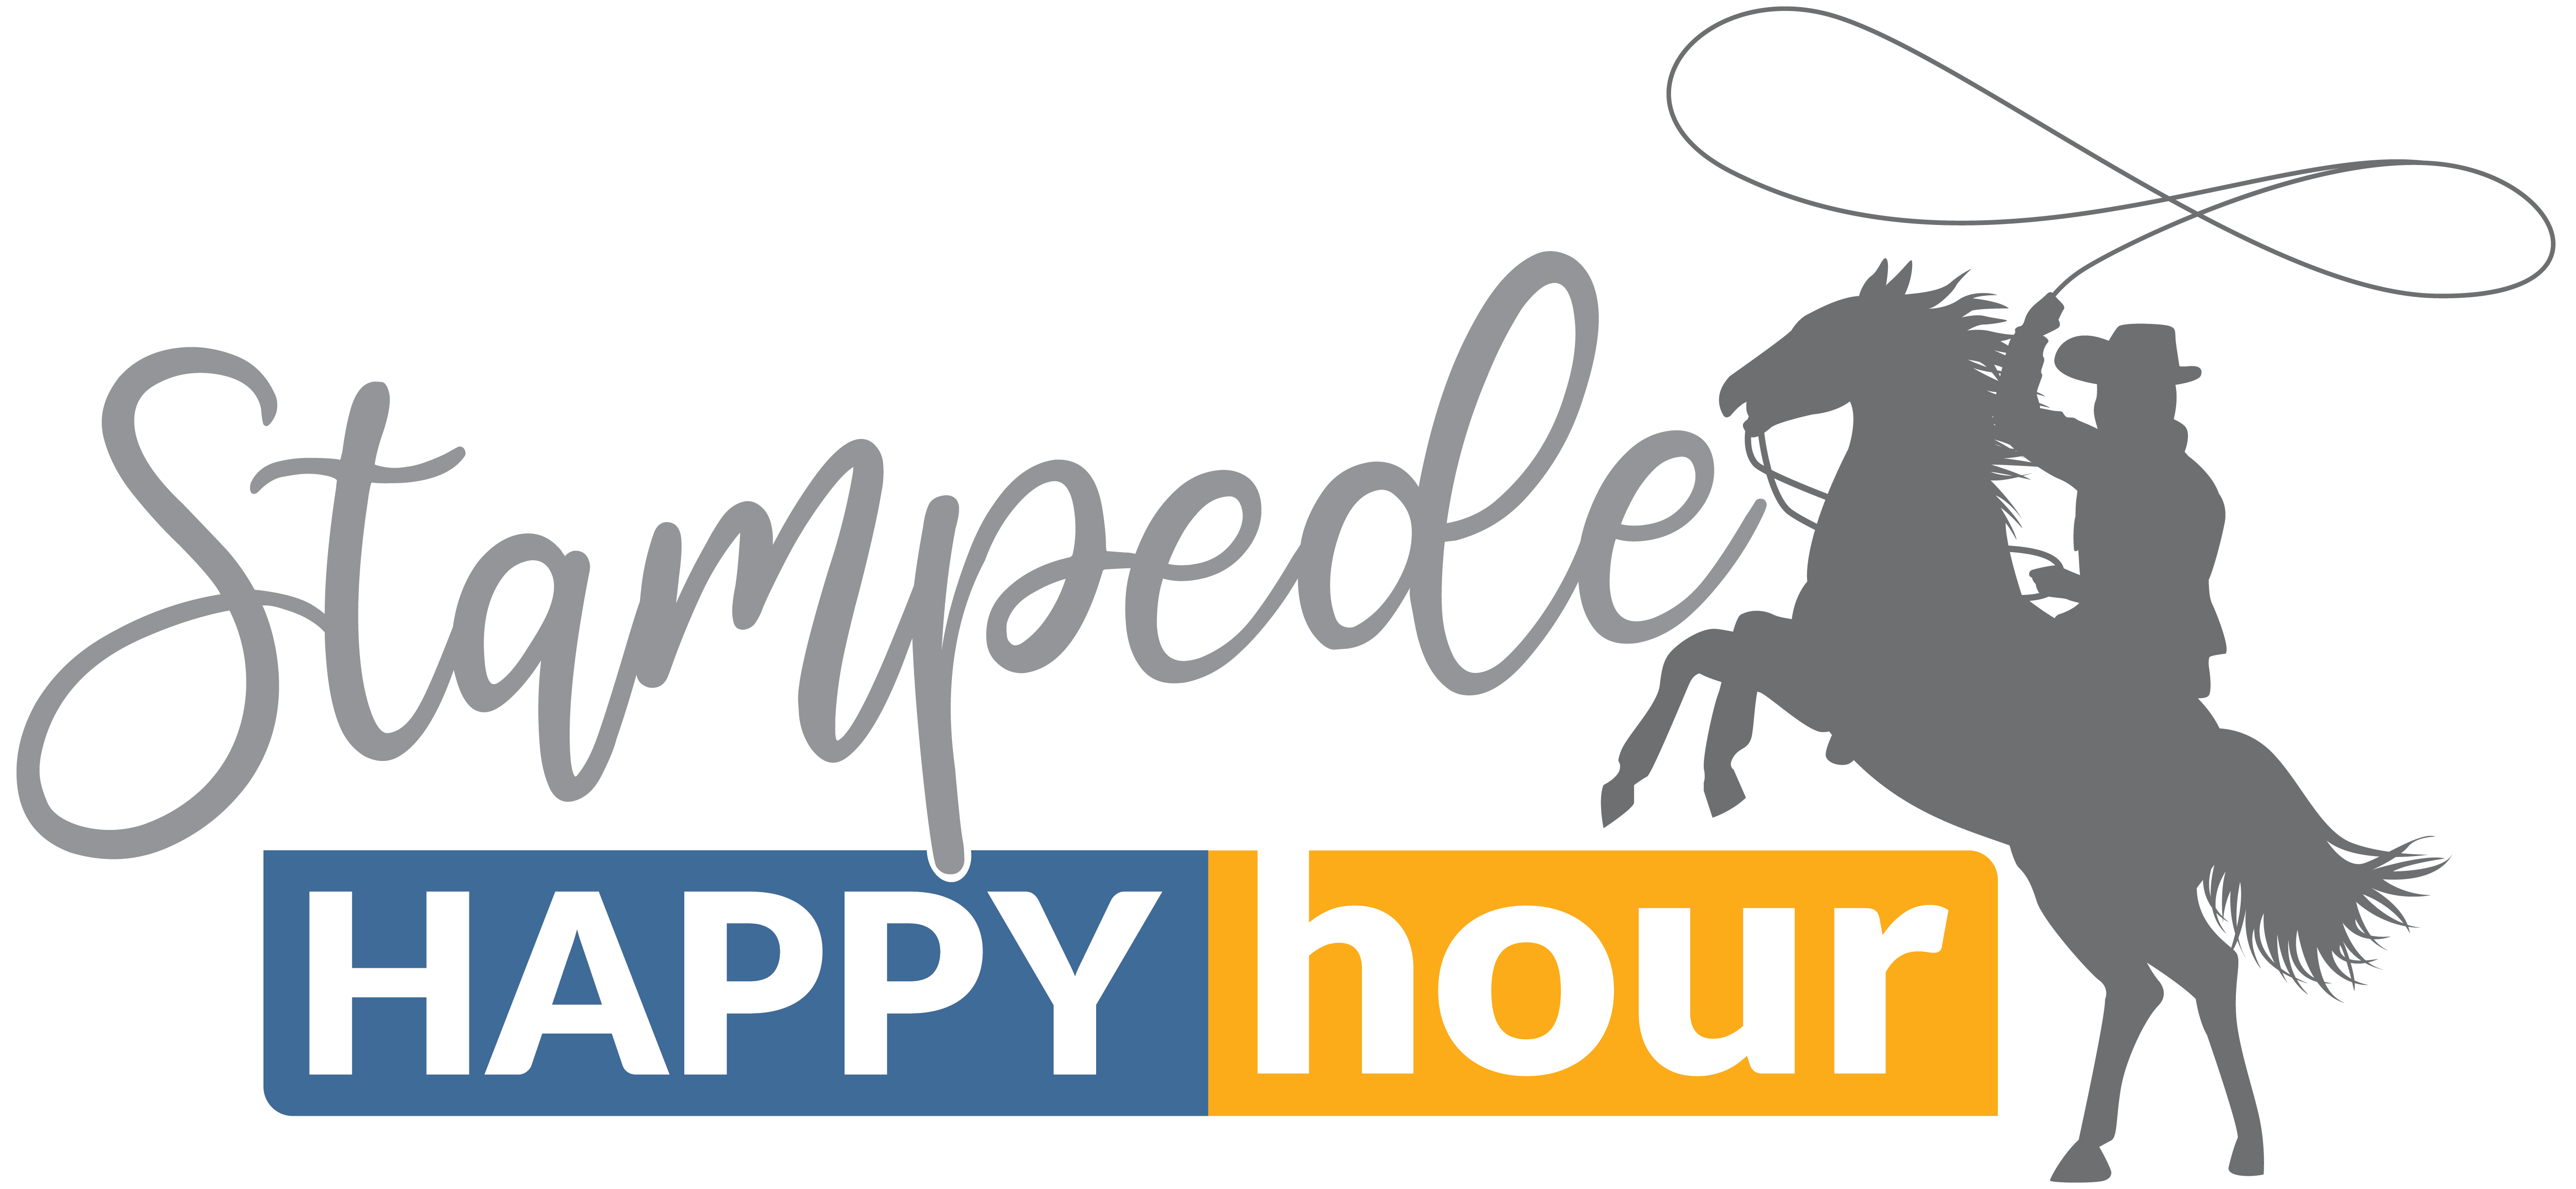 Stampede Happy hour logo